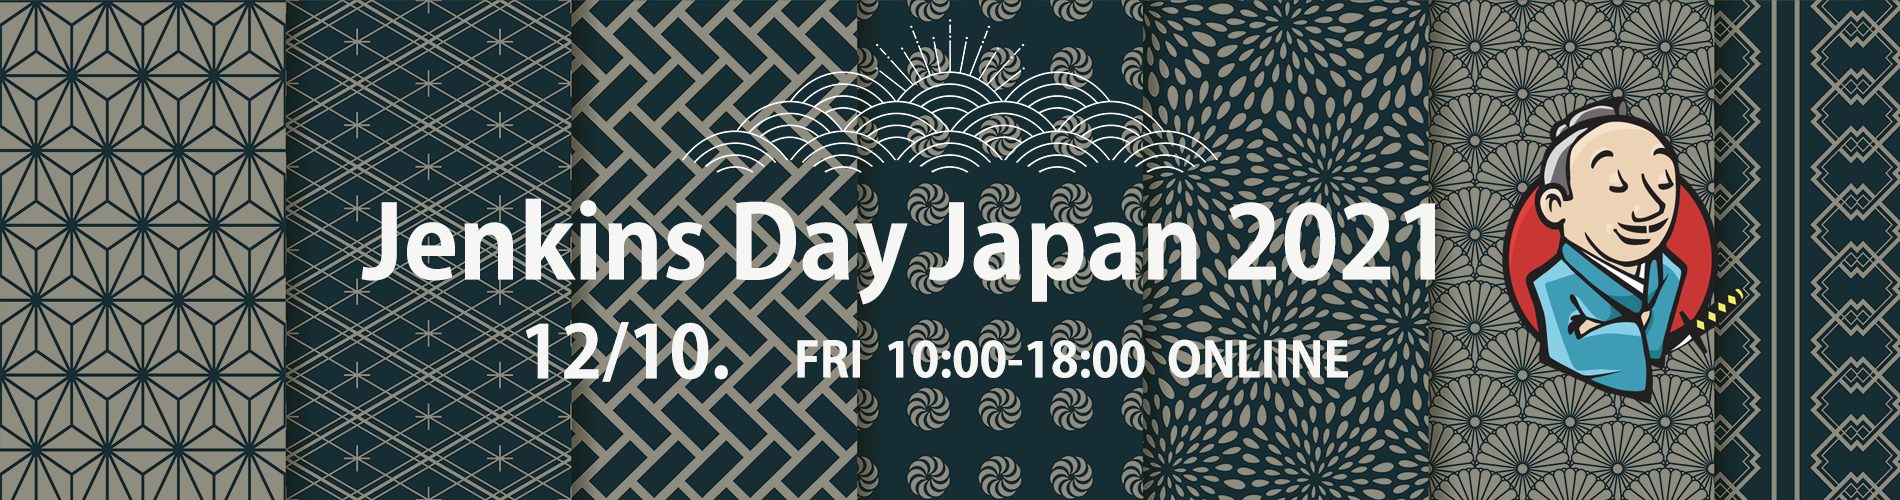 Jenkins Day Japan 2021